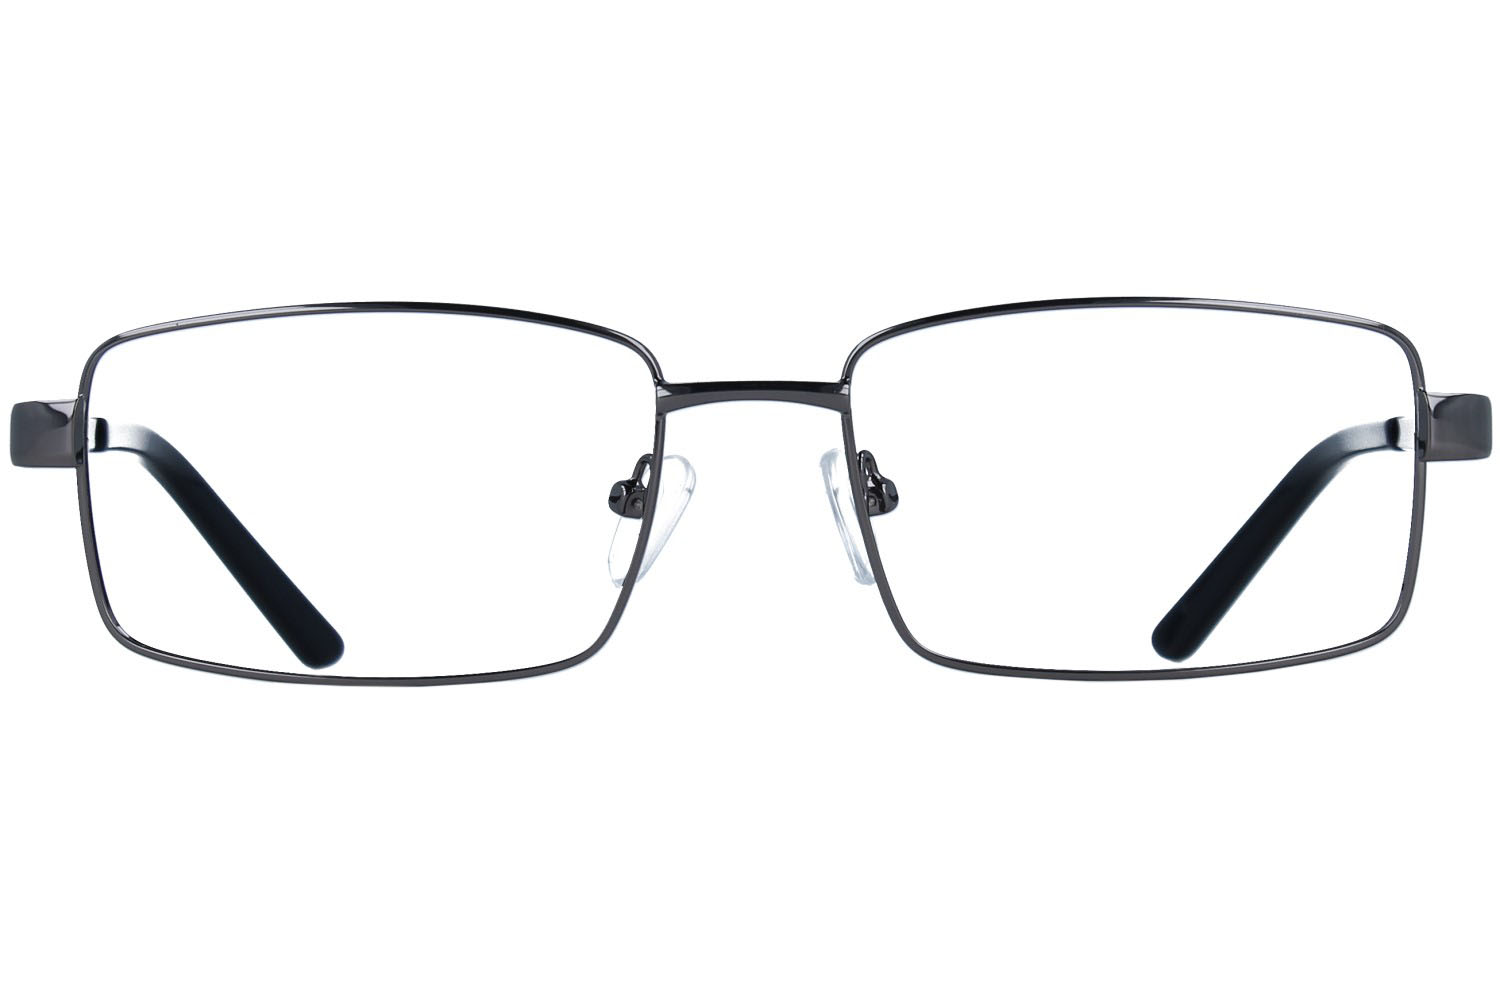 Mens Prescription Glasses Frames Online - Spec-Savers South Africa